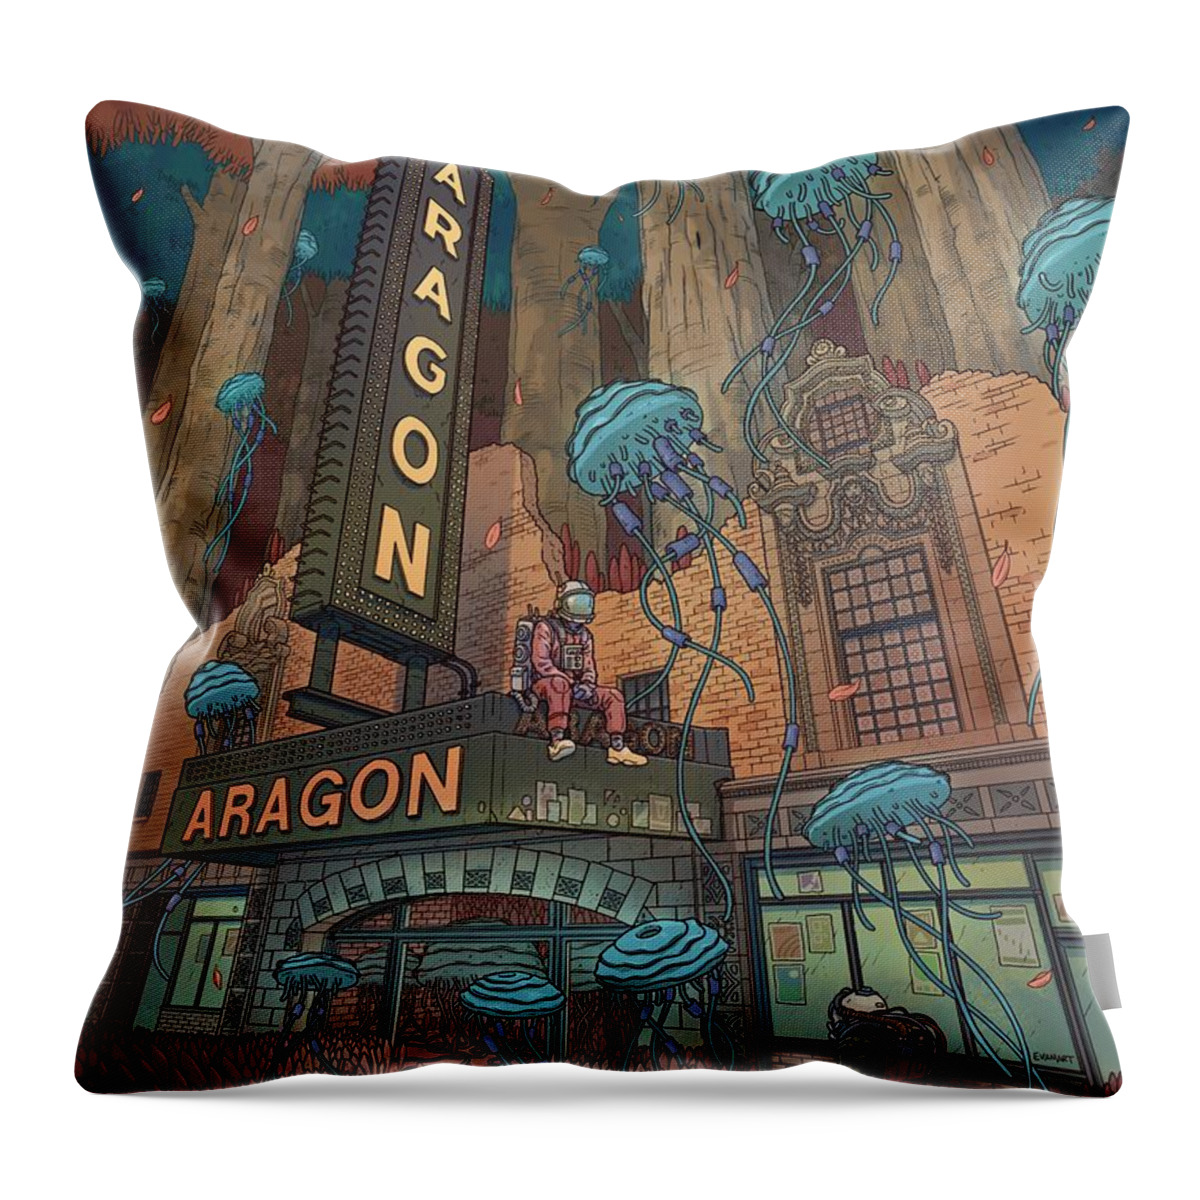 Chicago Throw Pillow featuring the digital art Aragon Ballroom by EvanArt - Evan Miller